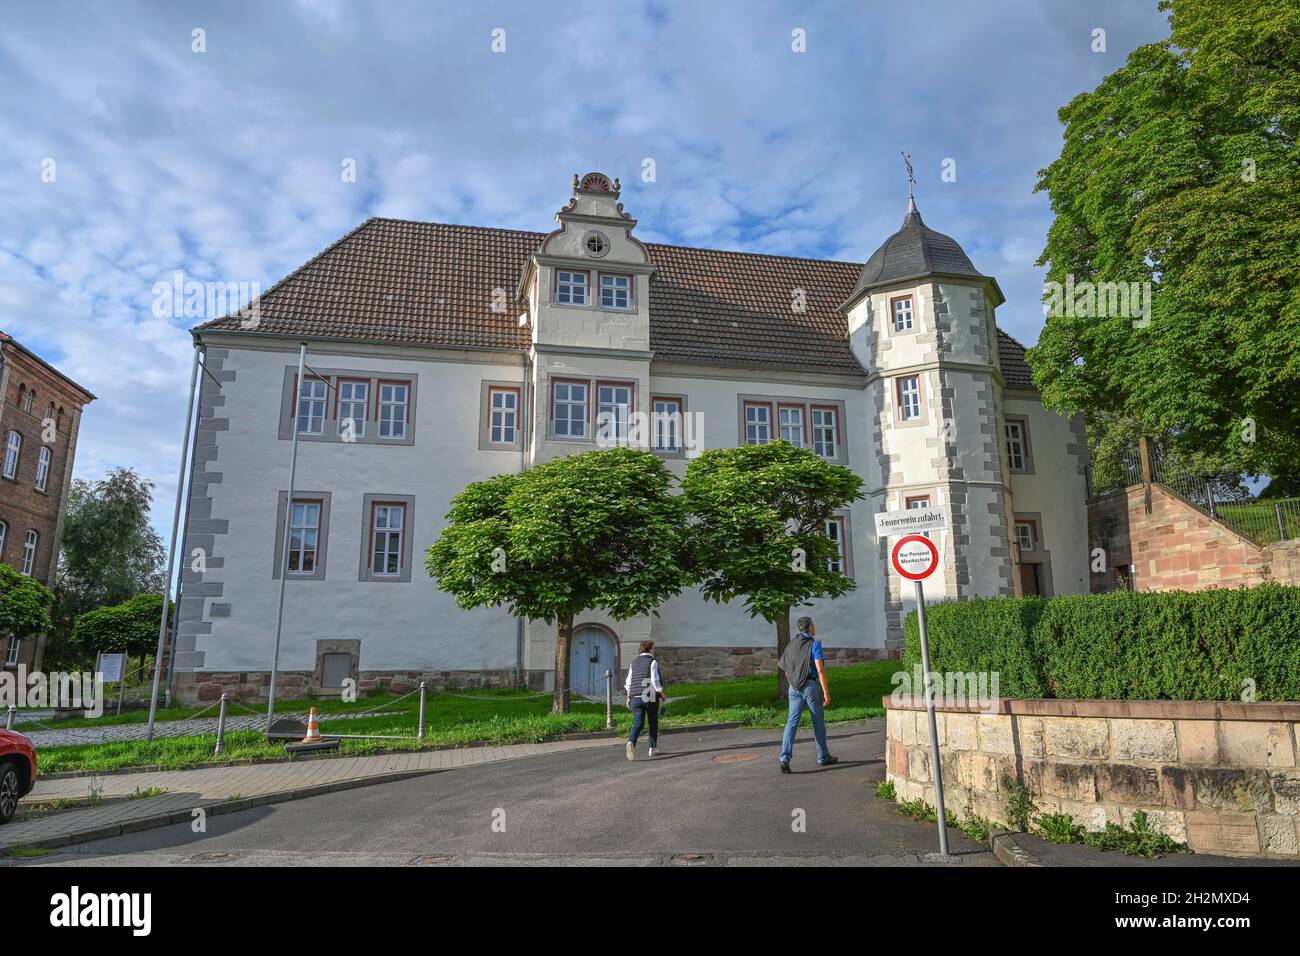 Hochzeitshaus, Stadtverwaltung, Eschwege, Hessen, Deutschland Foto de stock